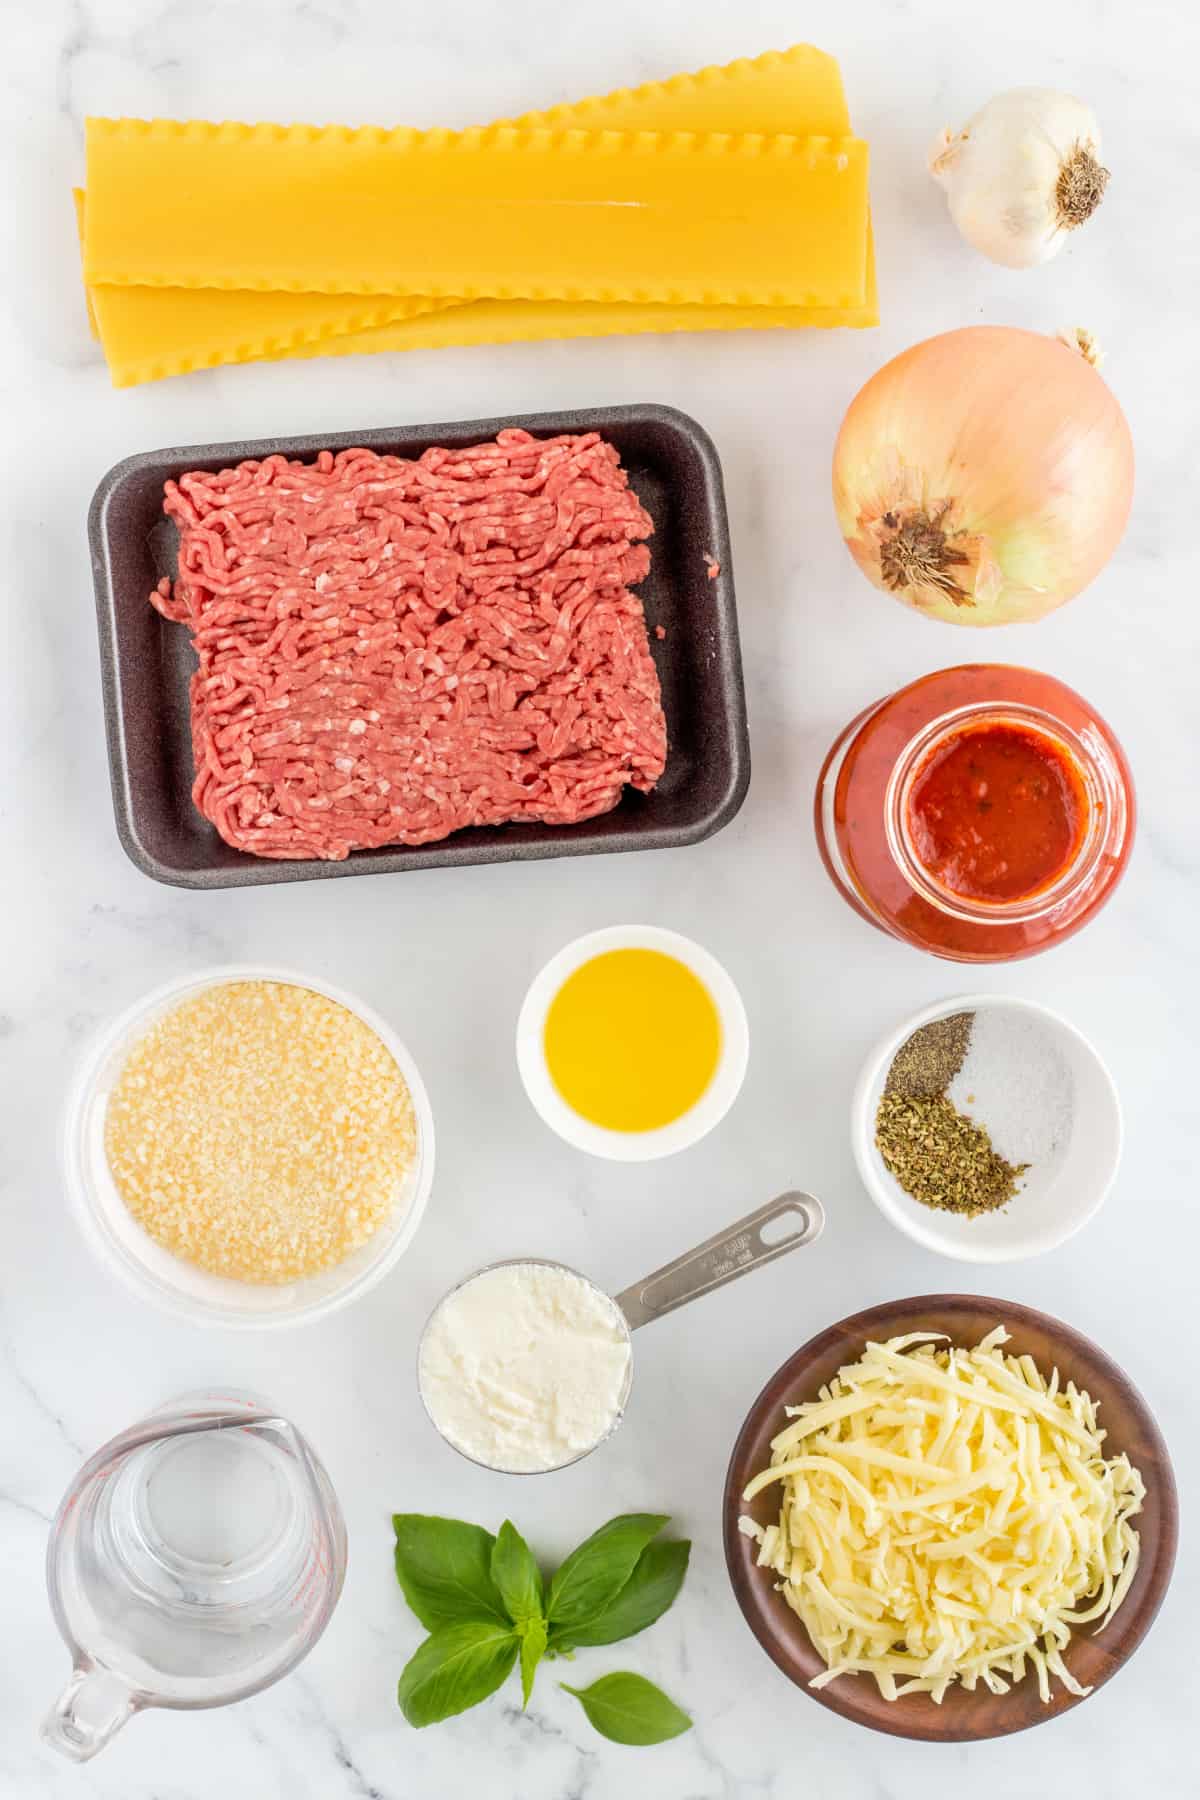 Ingredients for skillet lasagna